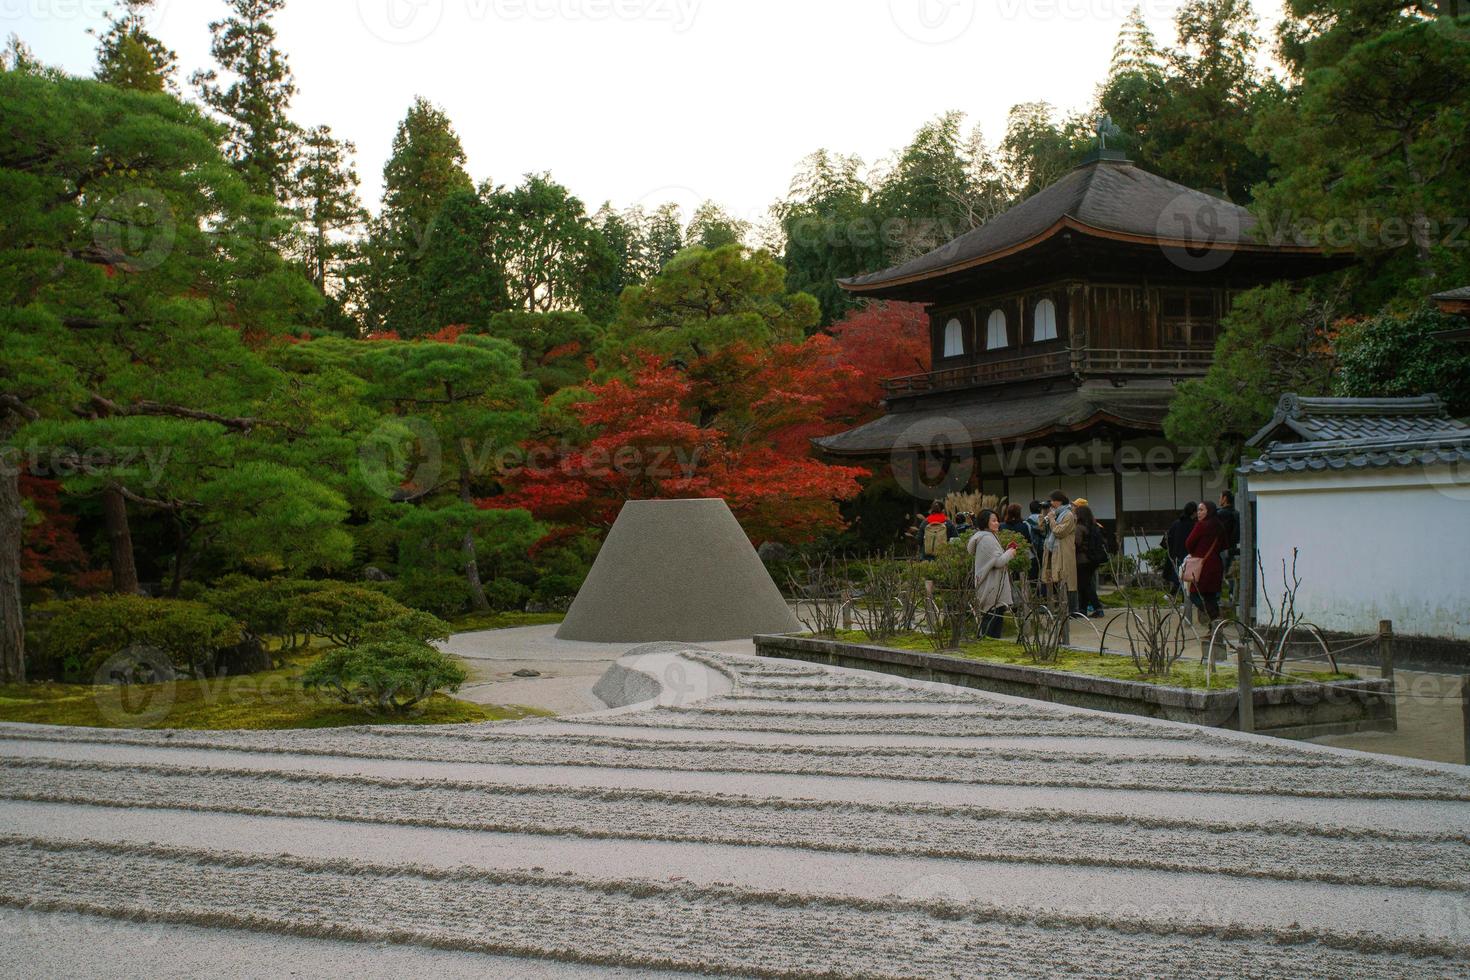 jardín de arena ginshaden, jardín zen o jardín de rocas japonés, en ginkaku-ji, o templo del pabellón de plata oficialmente llamado jisho-ji, o templo de la misericordia brillante, kyoto, kansai, japón foto